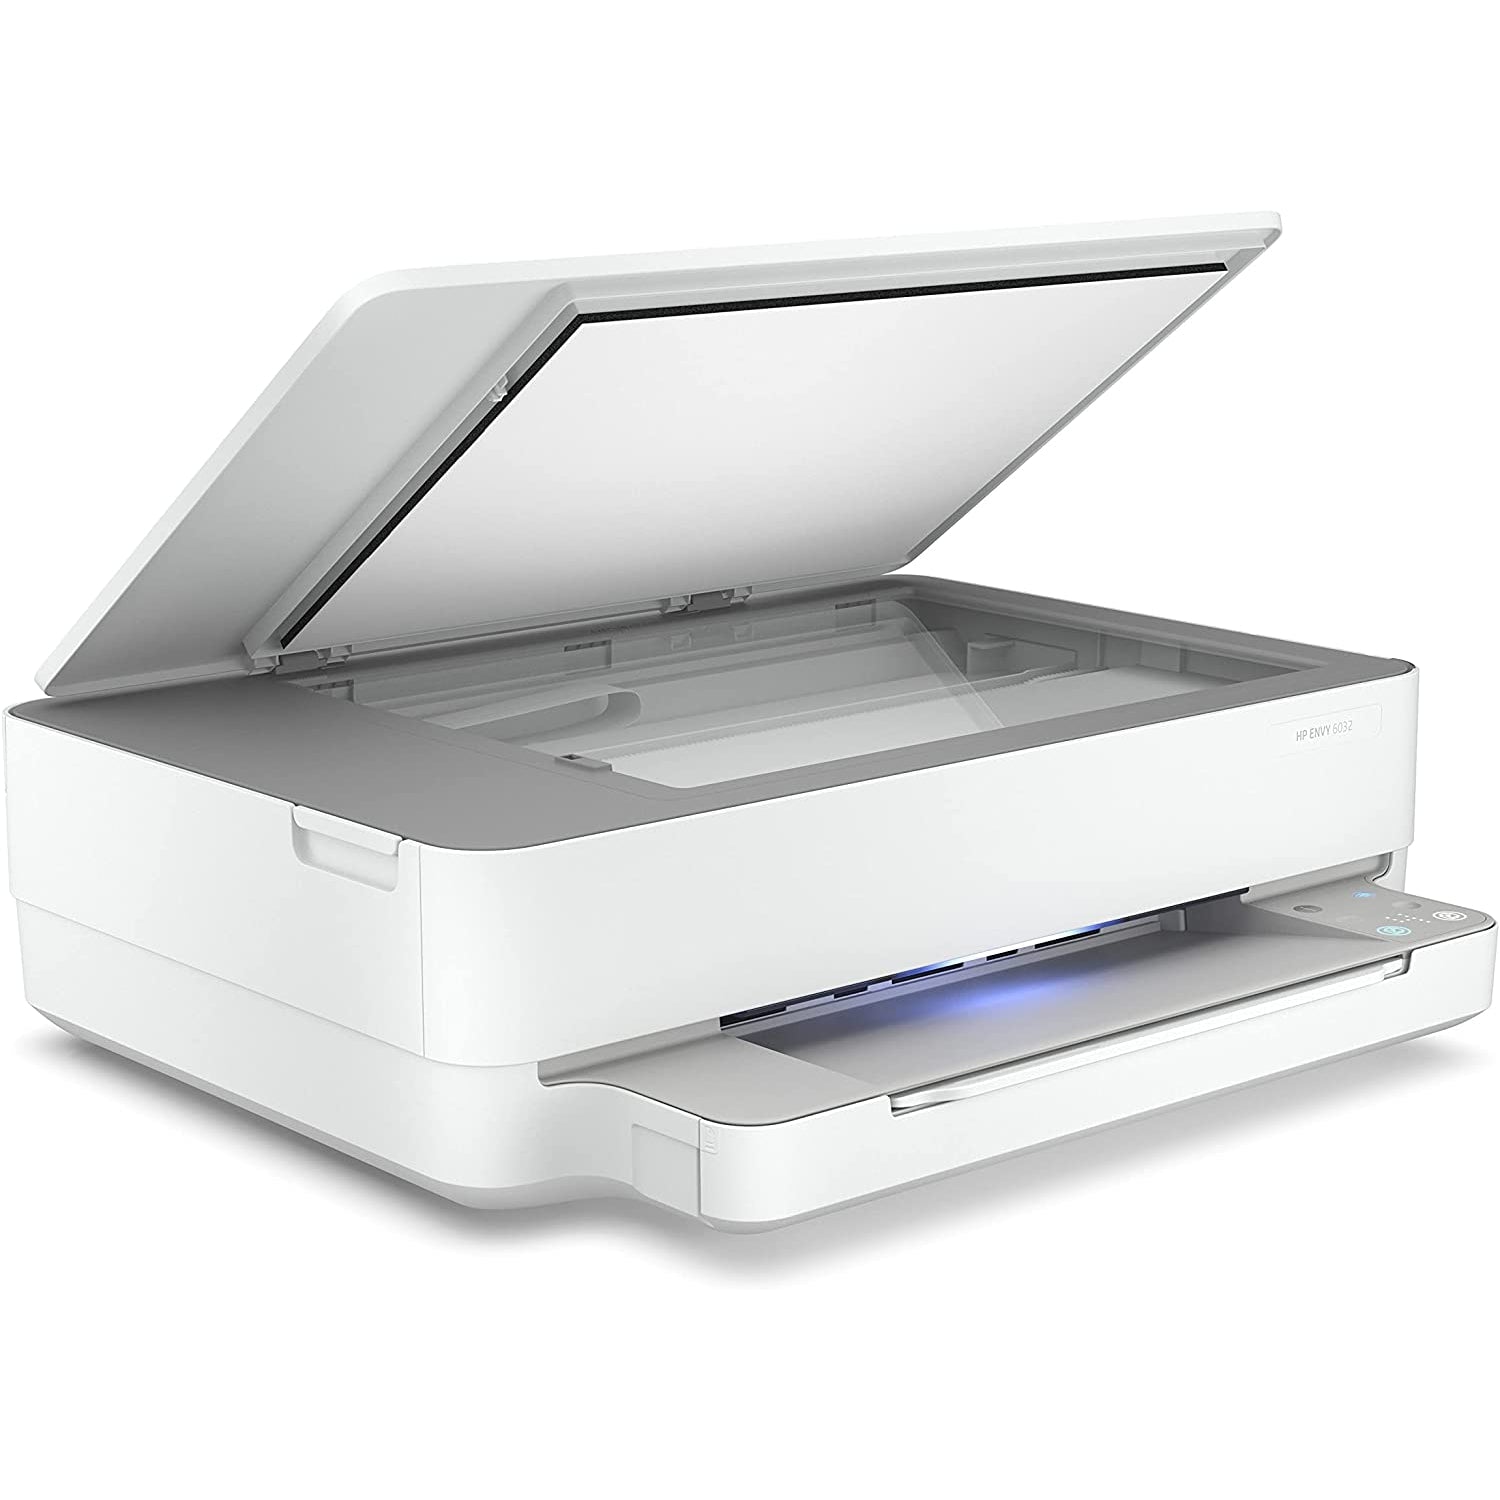 HP Envy 6032 All-in-One Wireless Inkjet Printer, White - New